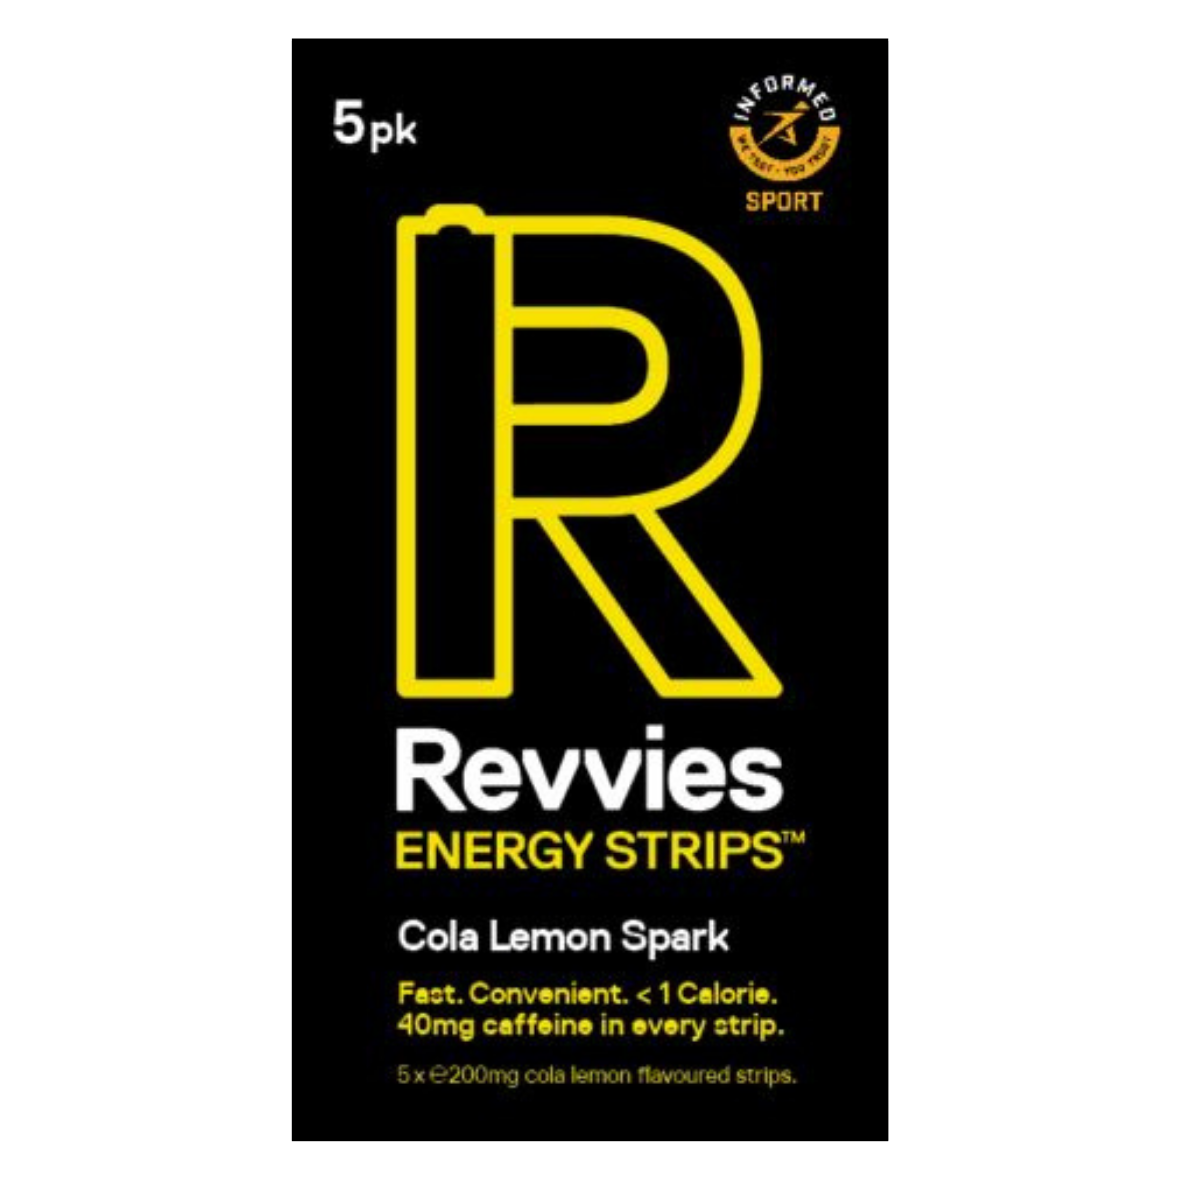 Revvies Cola Lemon Spark Energy Strips with 40mg caffeine